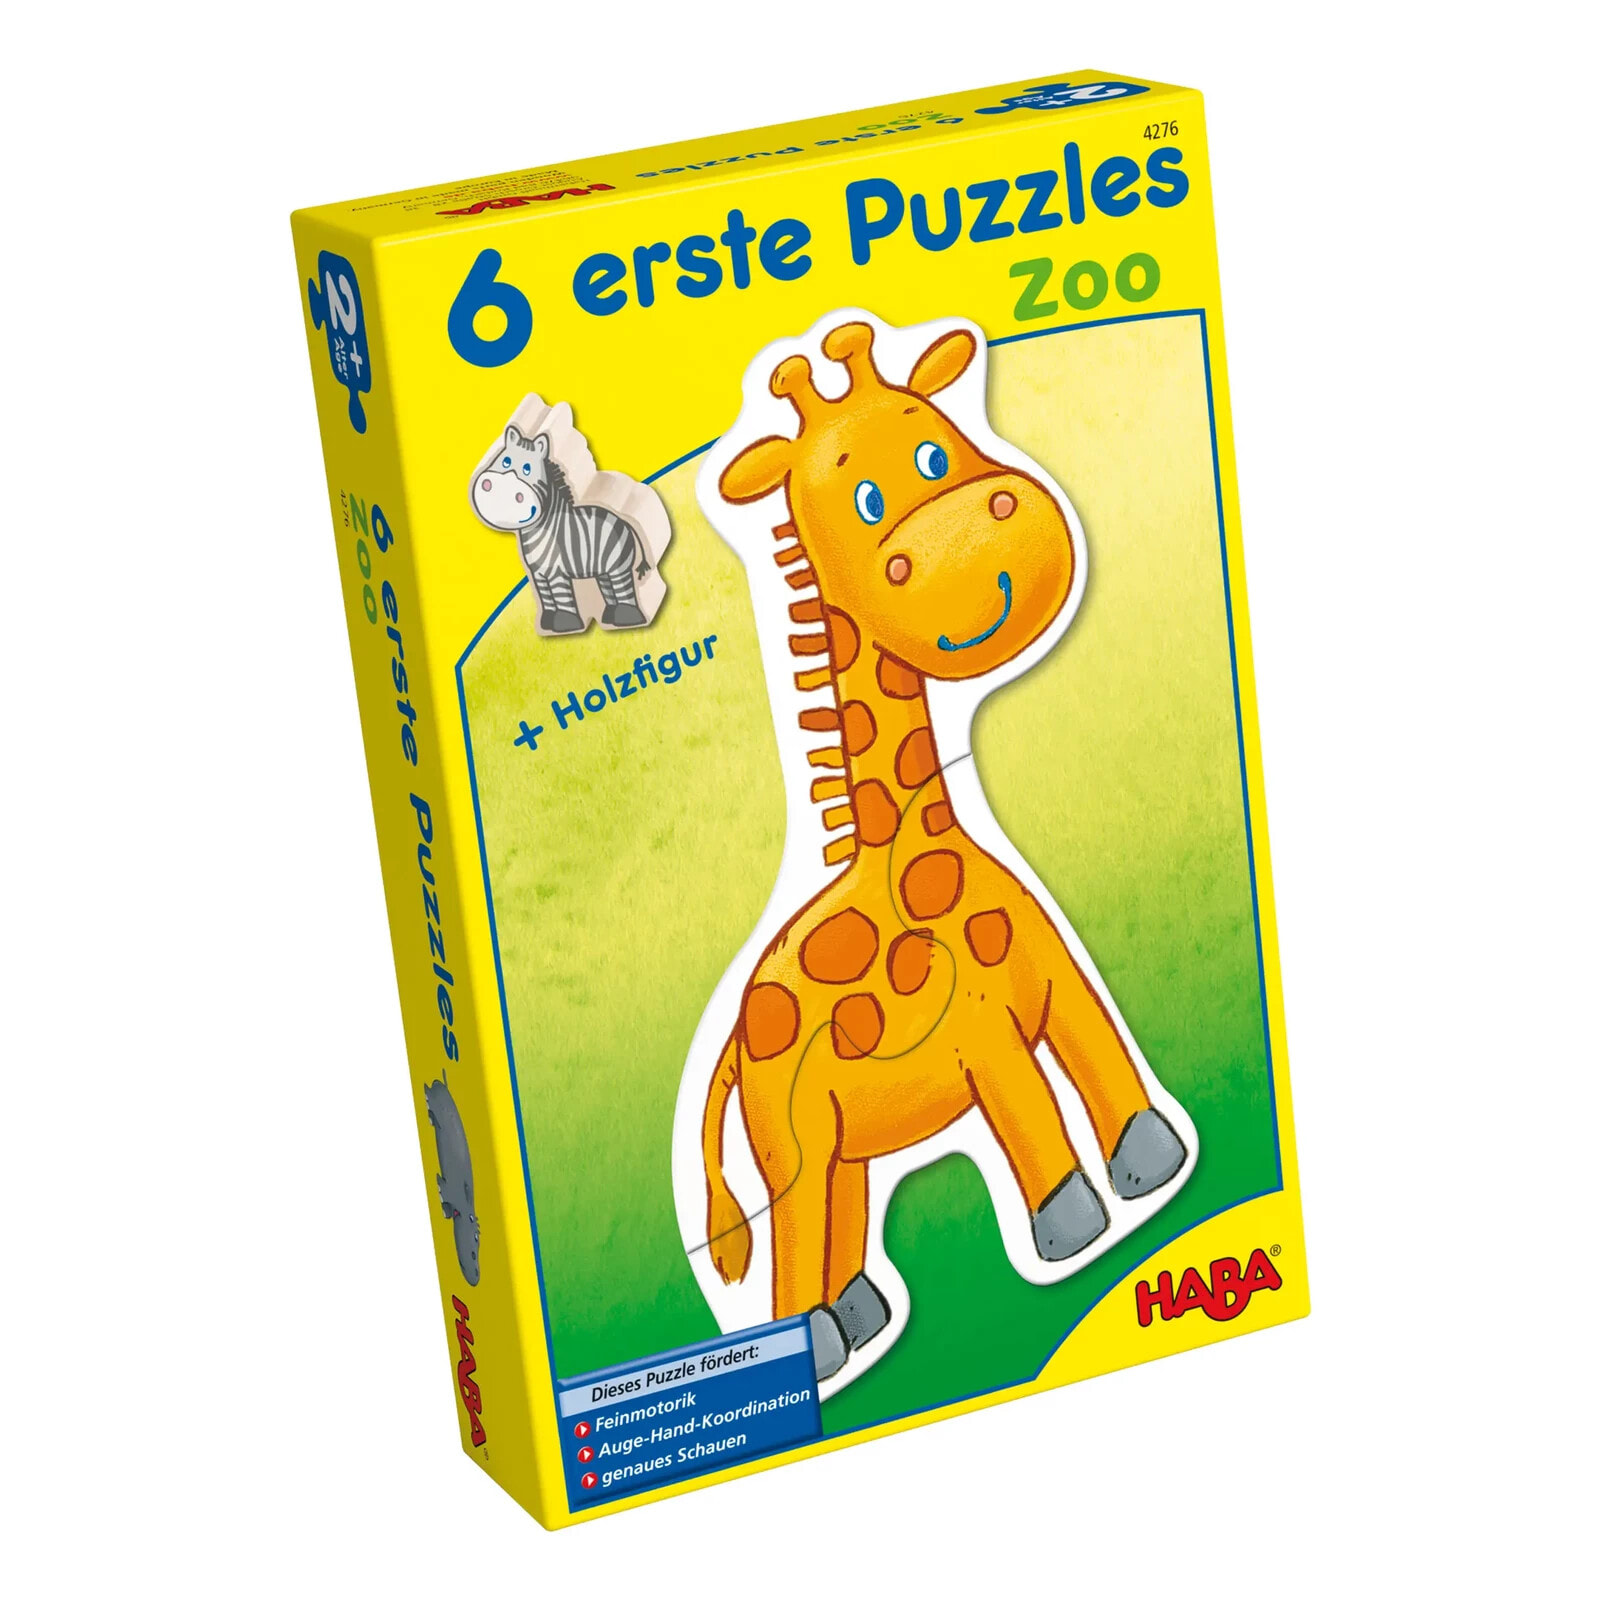 6 Erste Puzzles Zoo